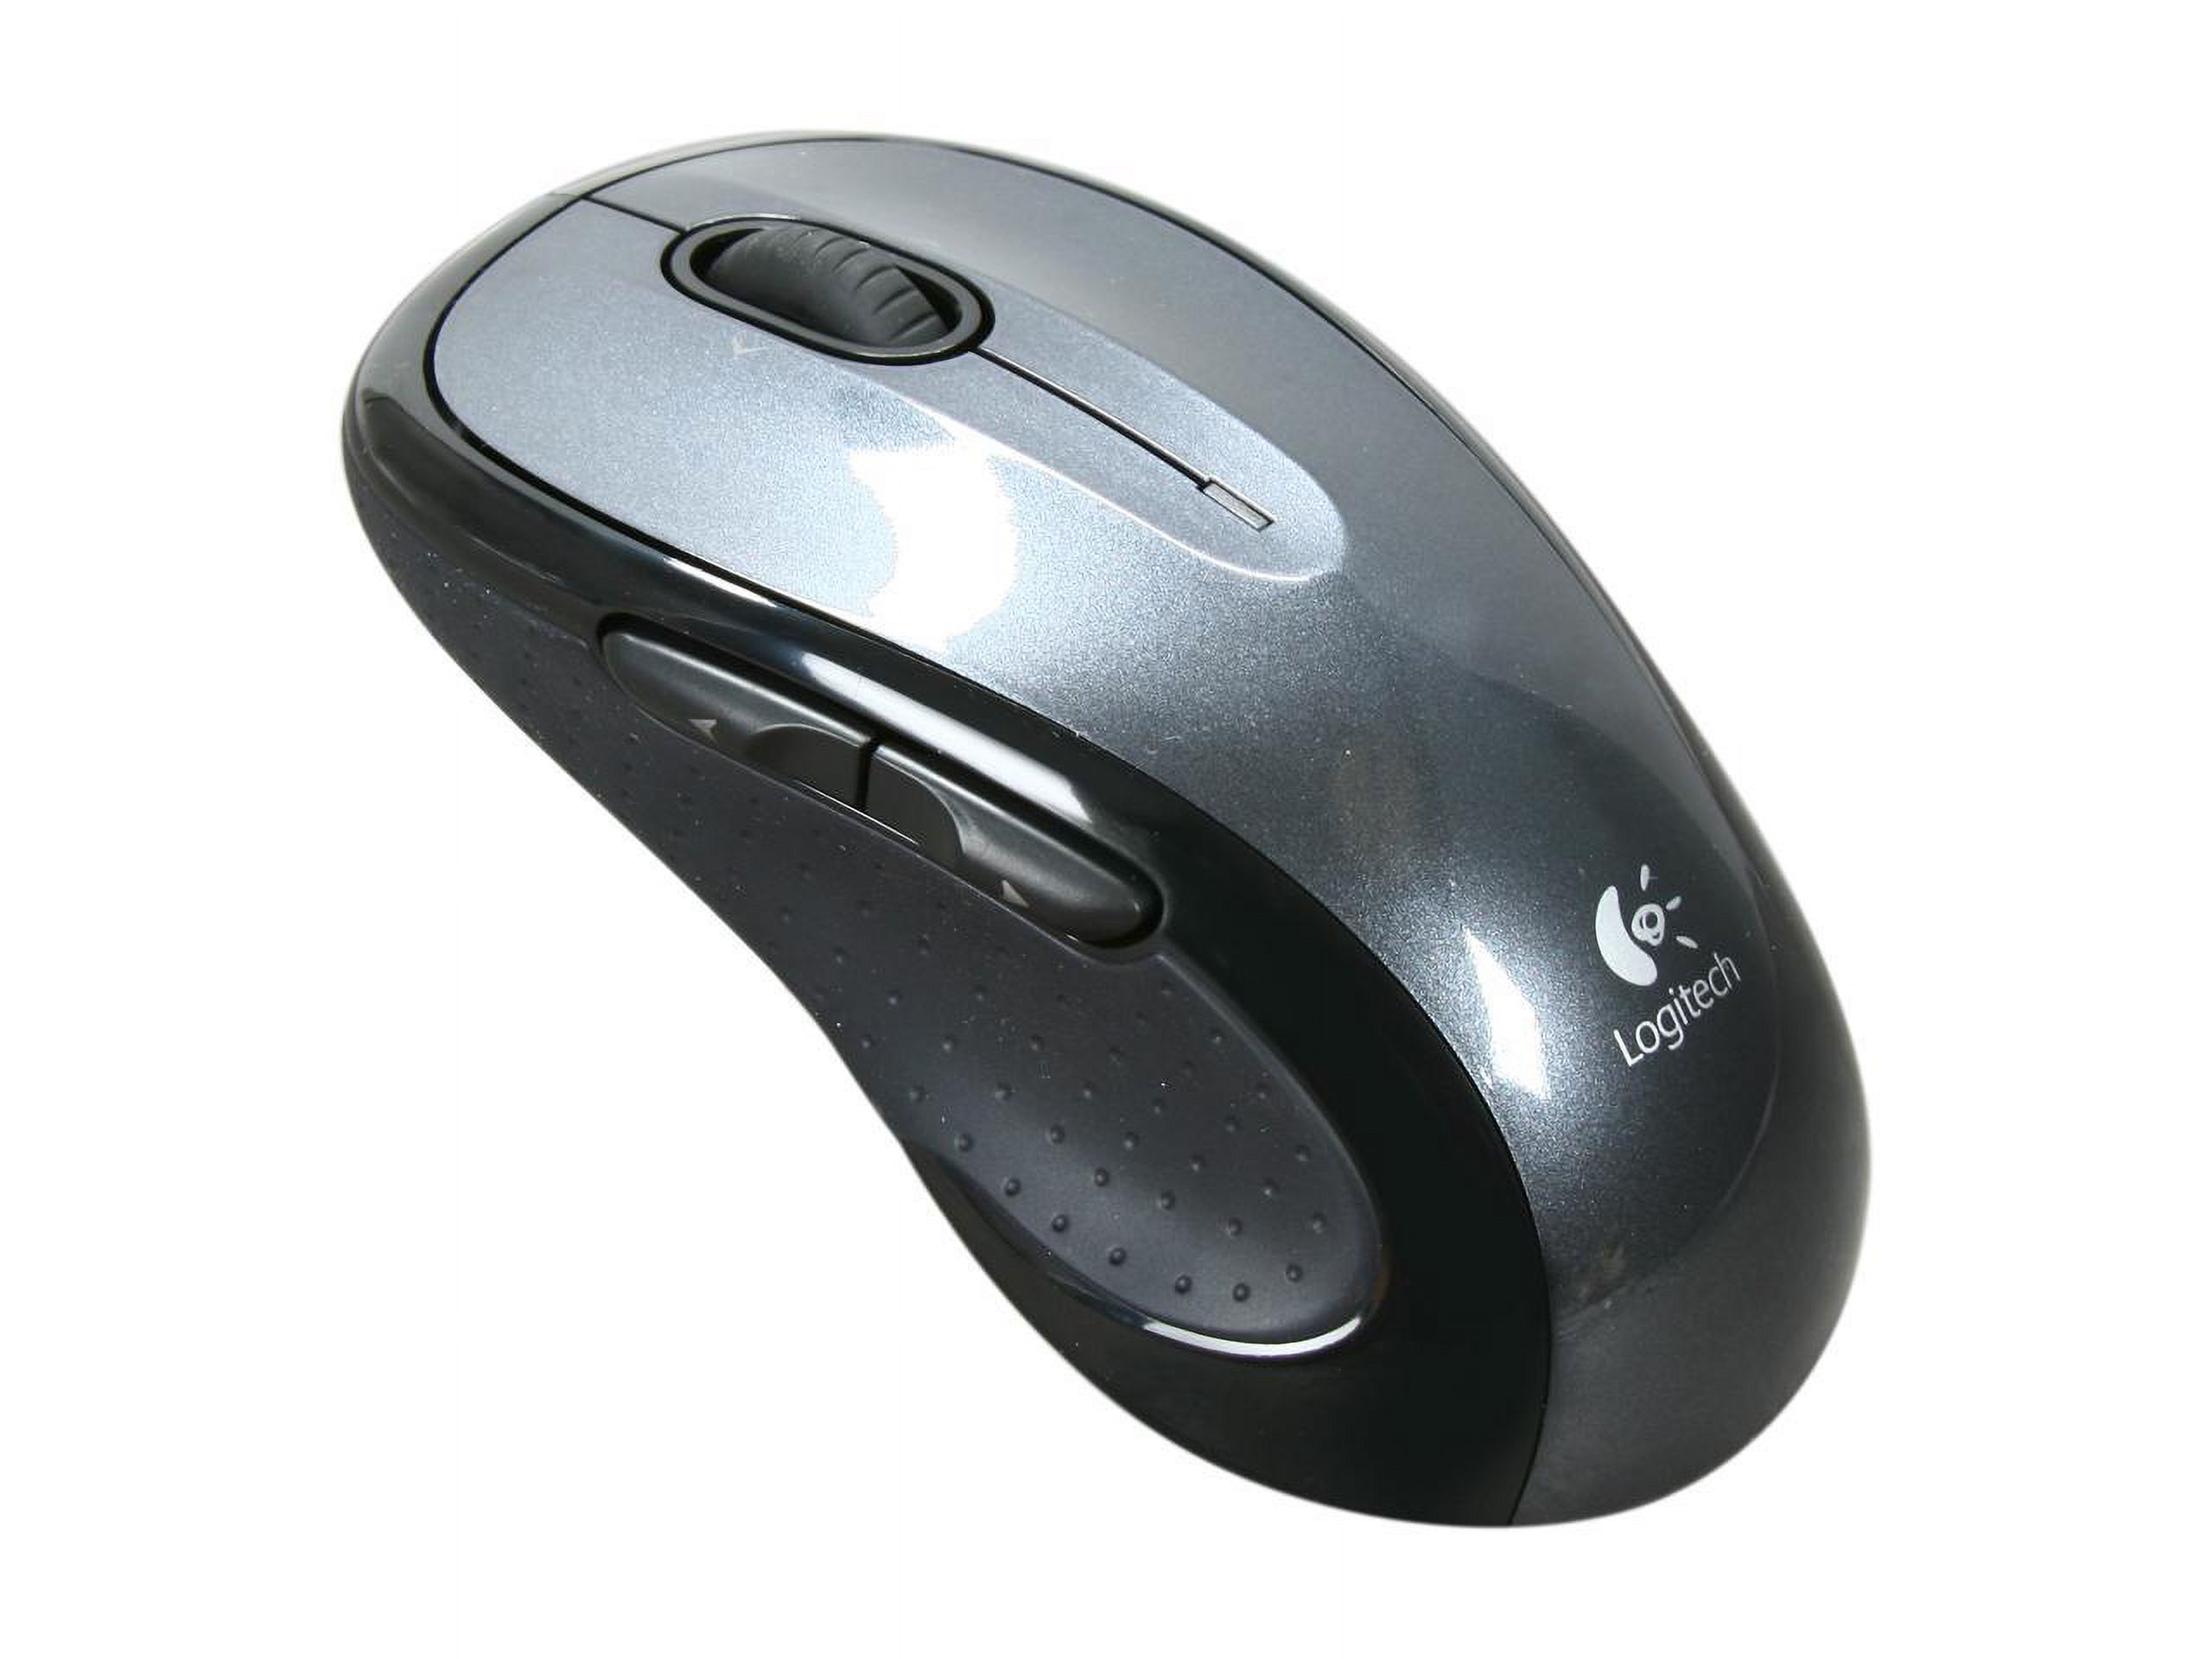 Logitech Wireless Mouse M510 - image 2 of 7